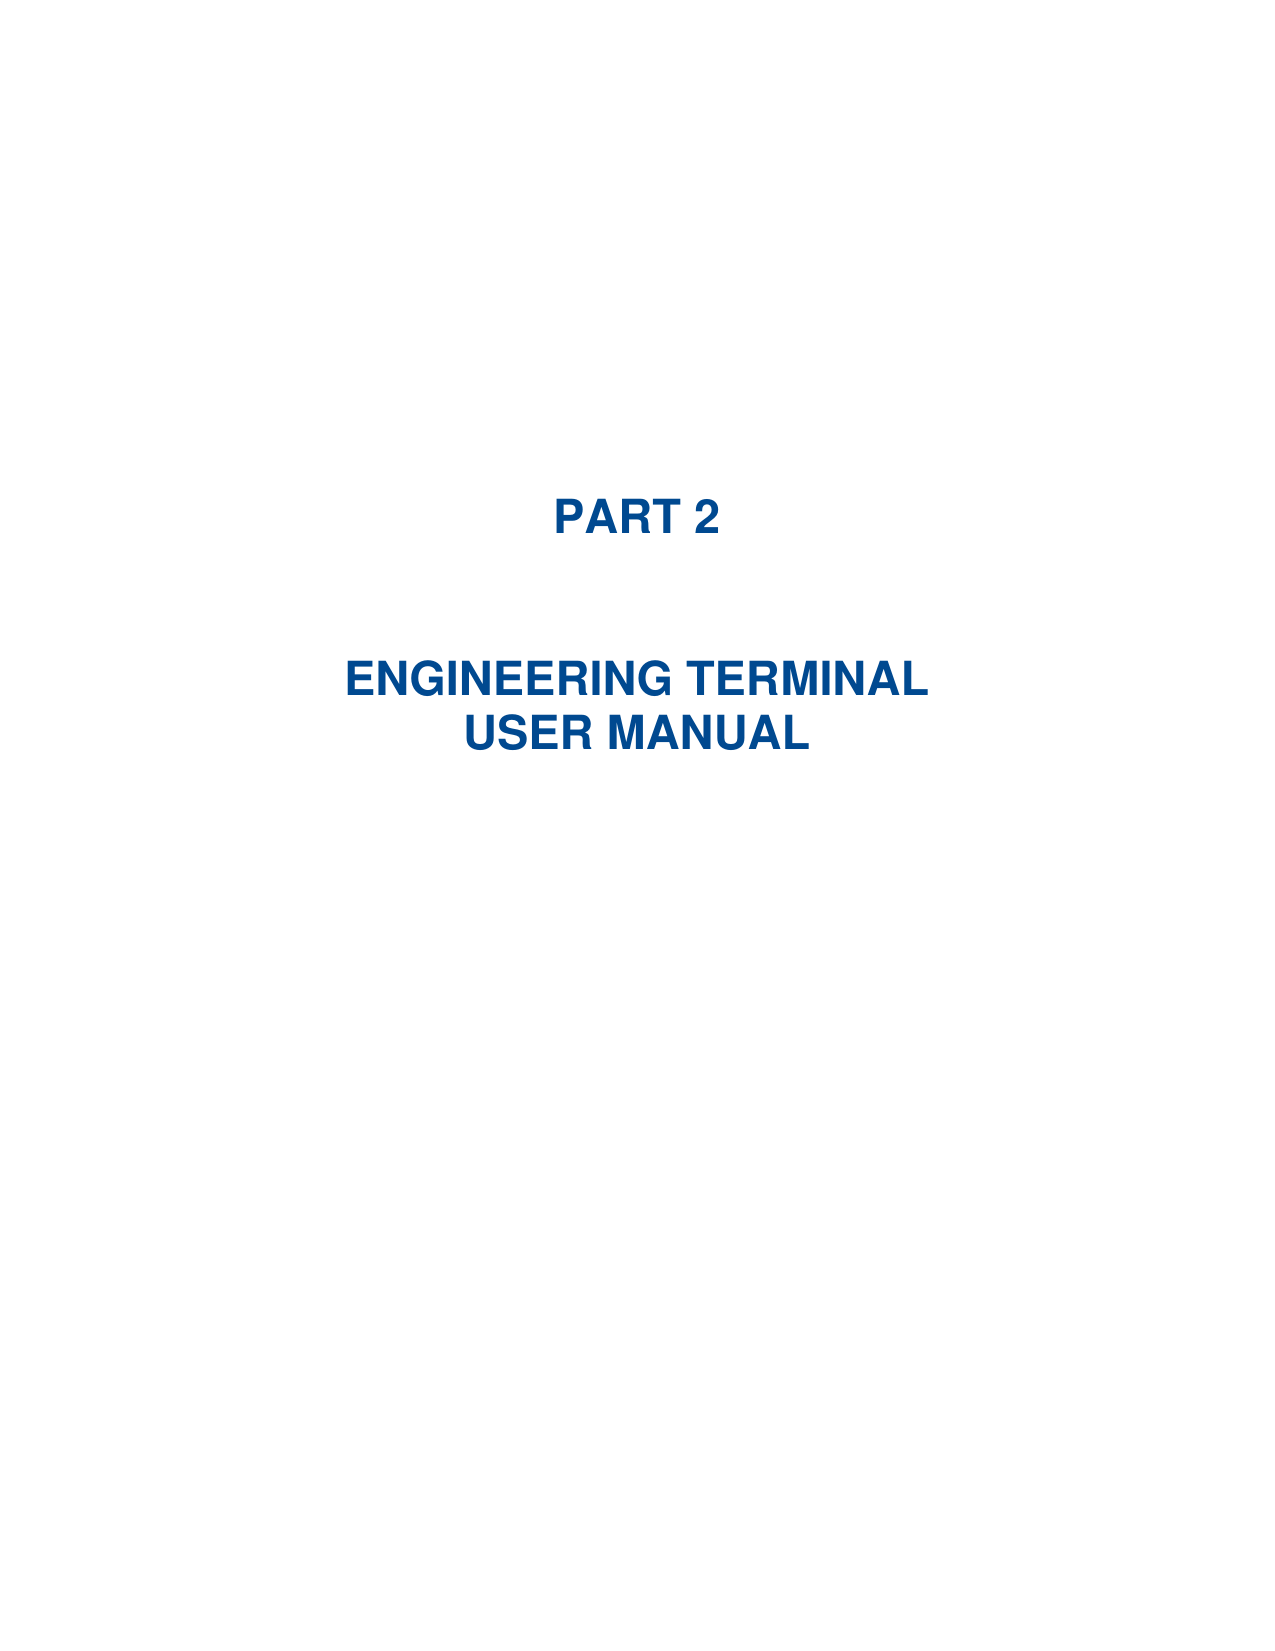           PART 2   ENGINEERING TERMINAL USER MANUAL     